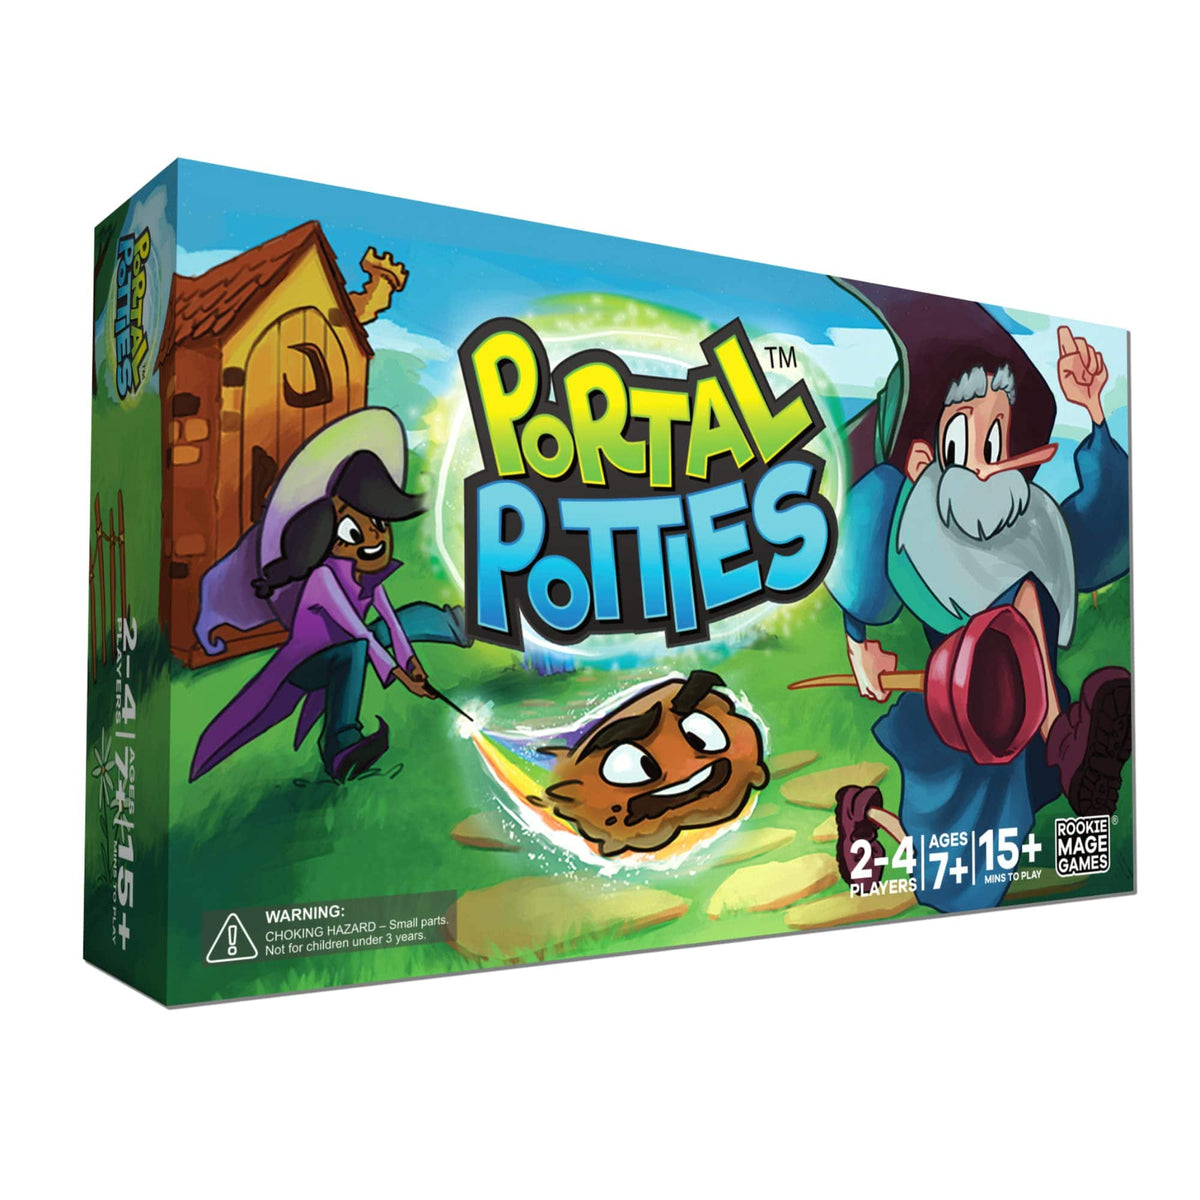 Portal Potties